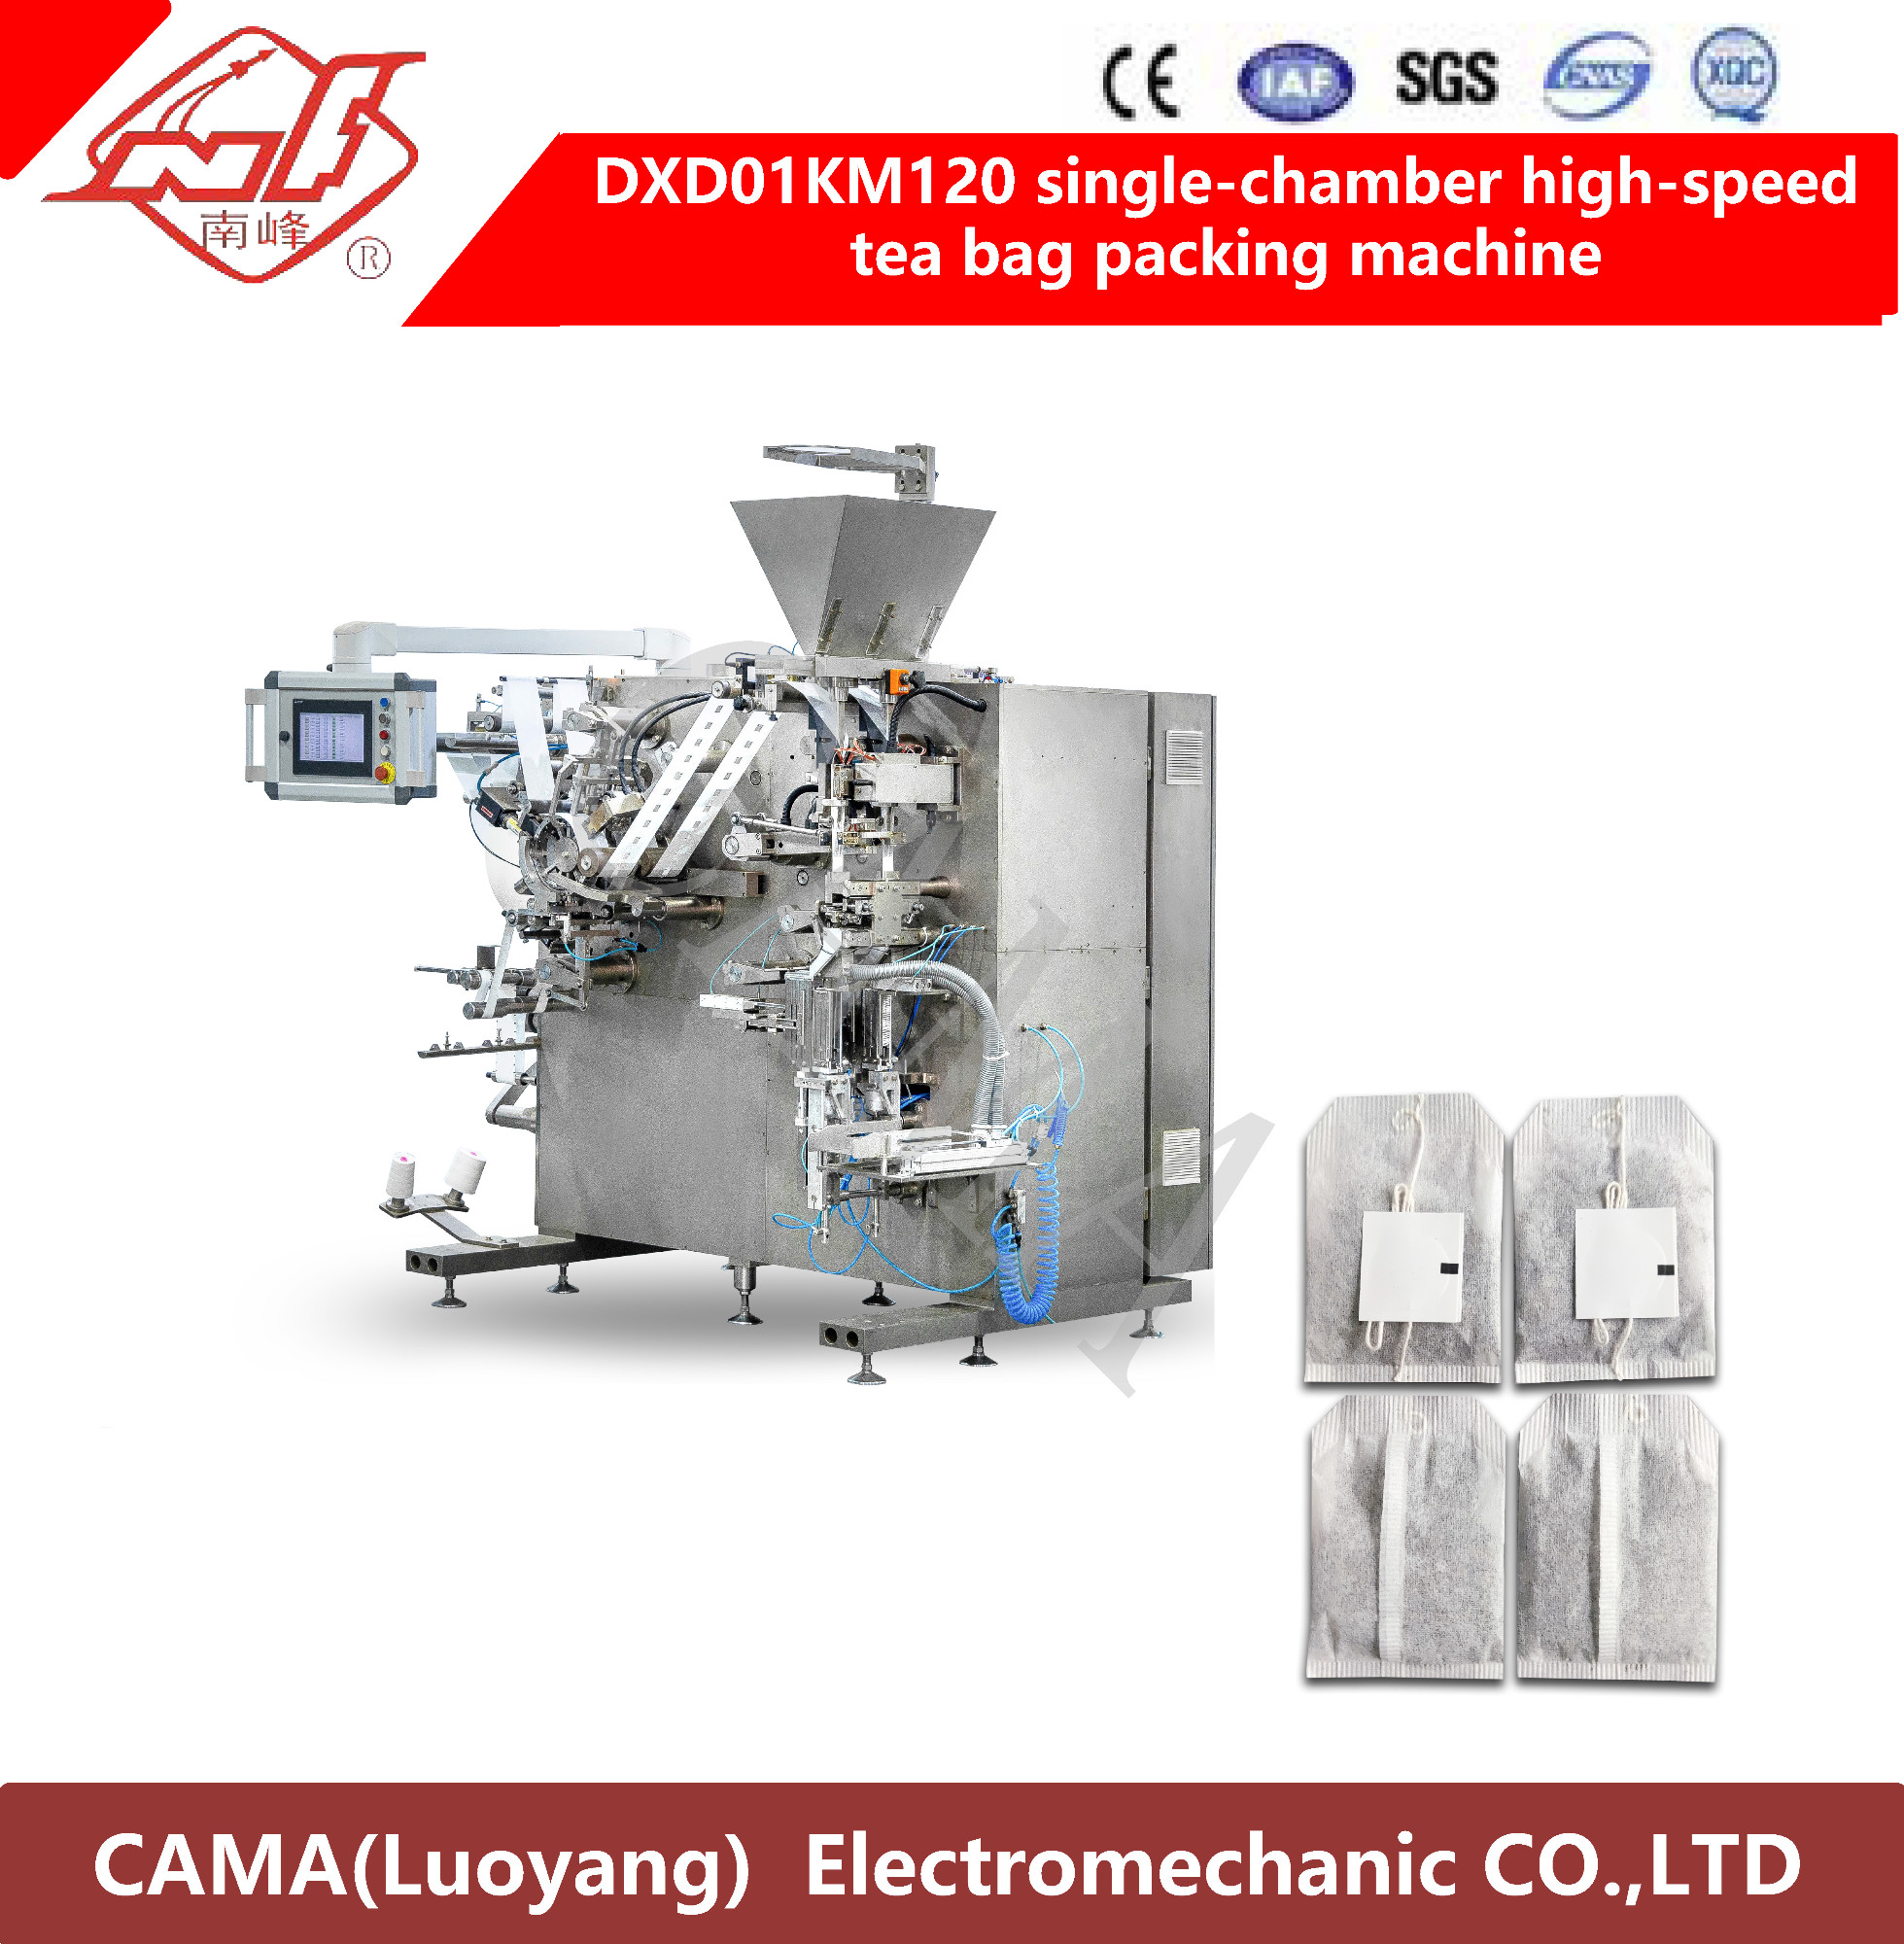 DXD01KM120 single-chamber high-speed tea bag packing machine